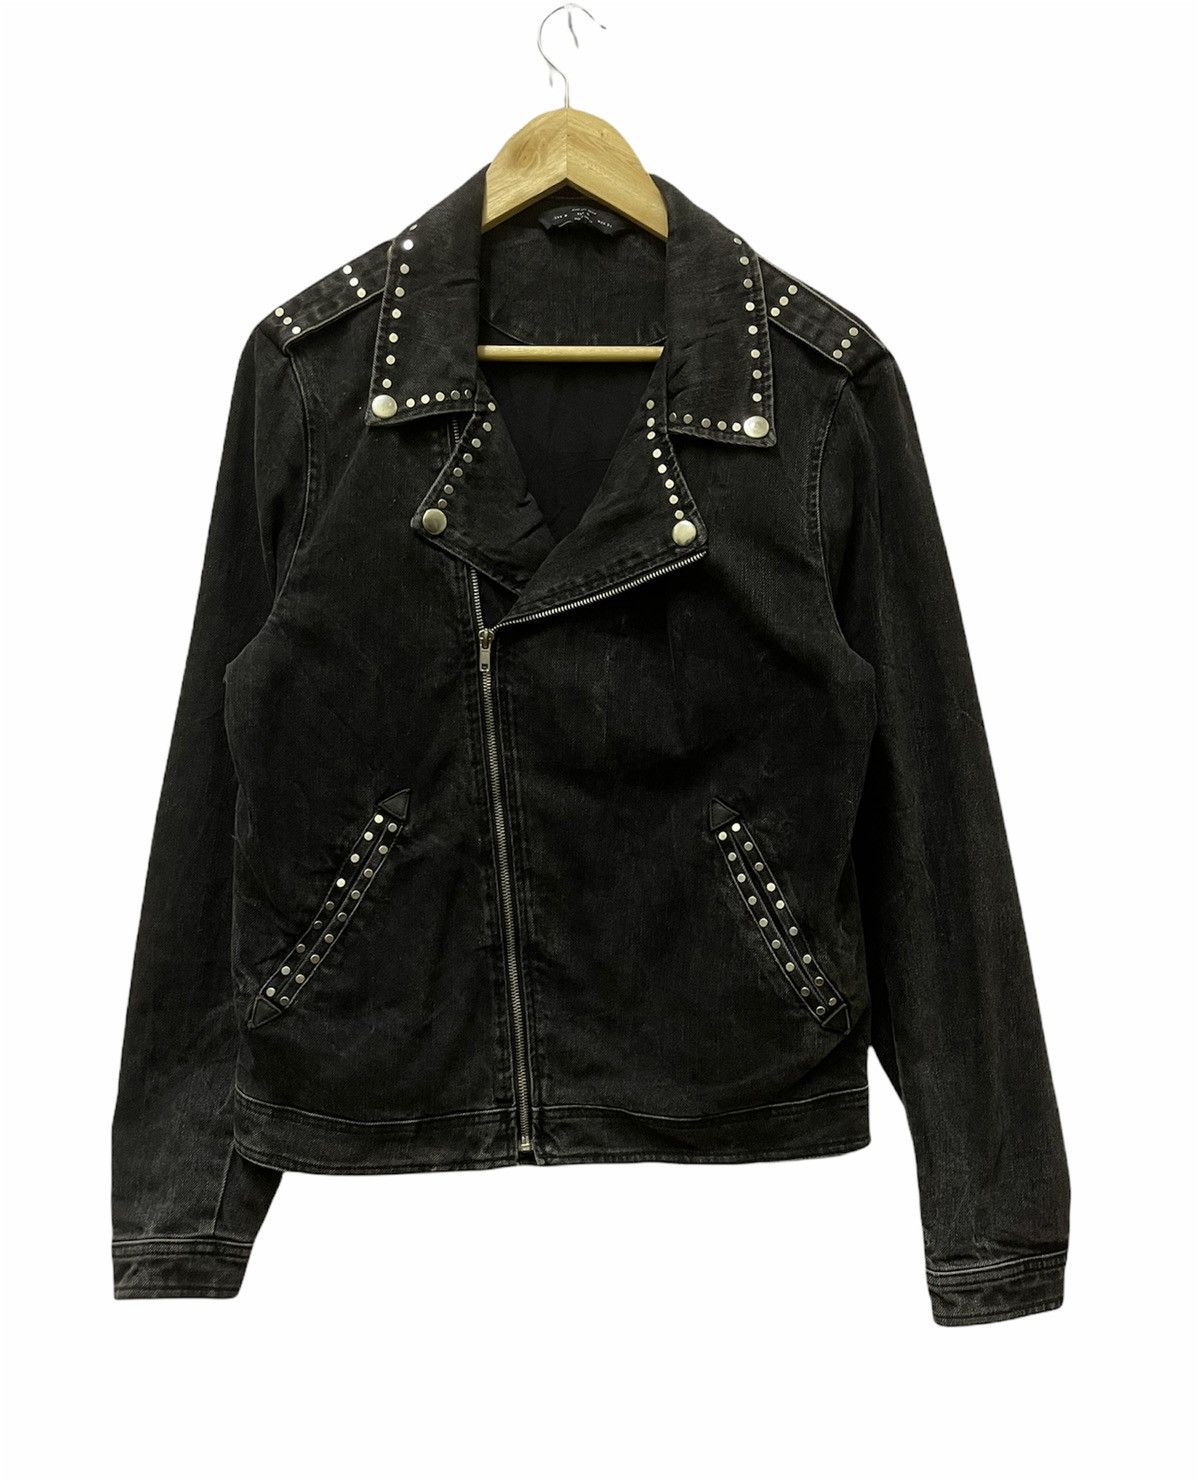 Zara Zara Man Denim Jacket Black Medium Size US M / EU 48-50 / 2 - 1 Preview